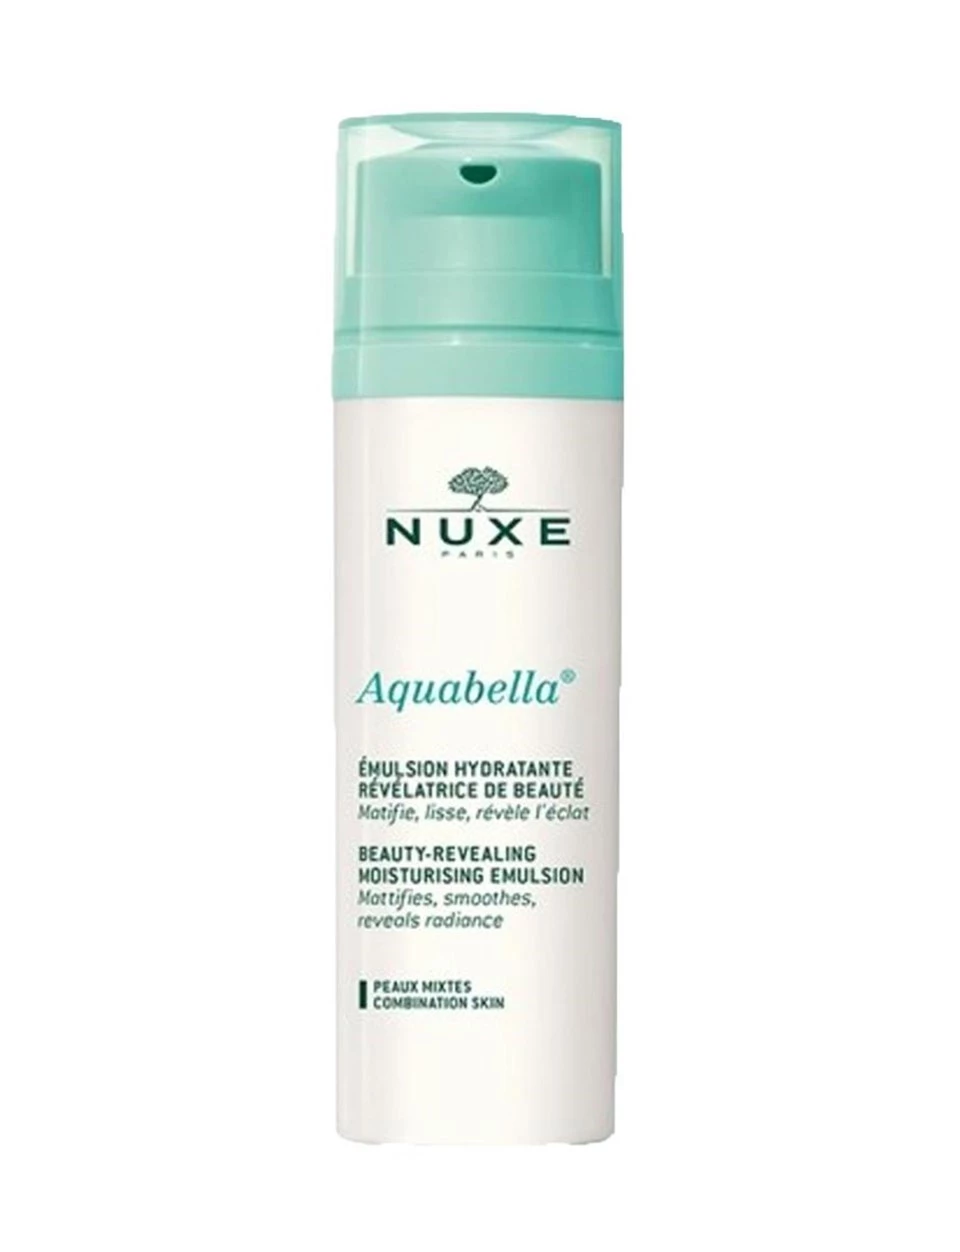 Nuxe Aquabella Emulsion Hydrante 50ml